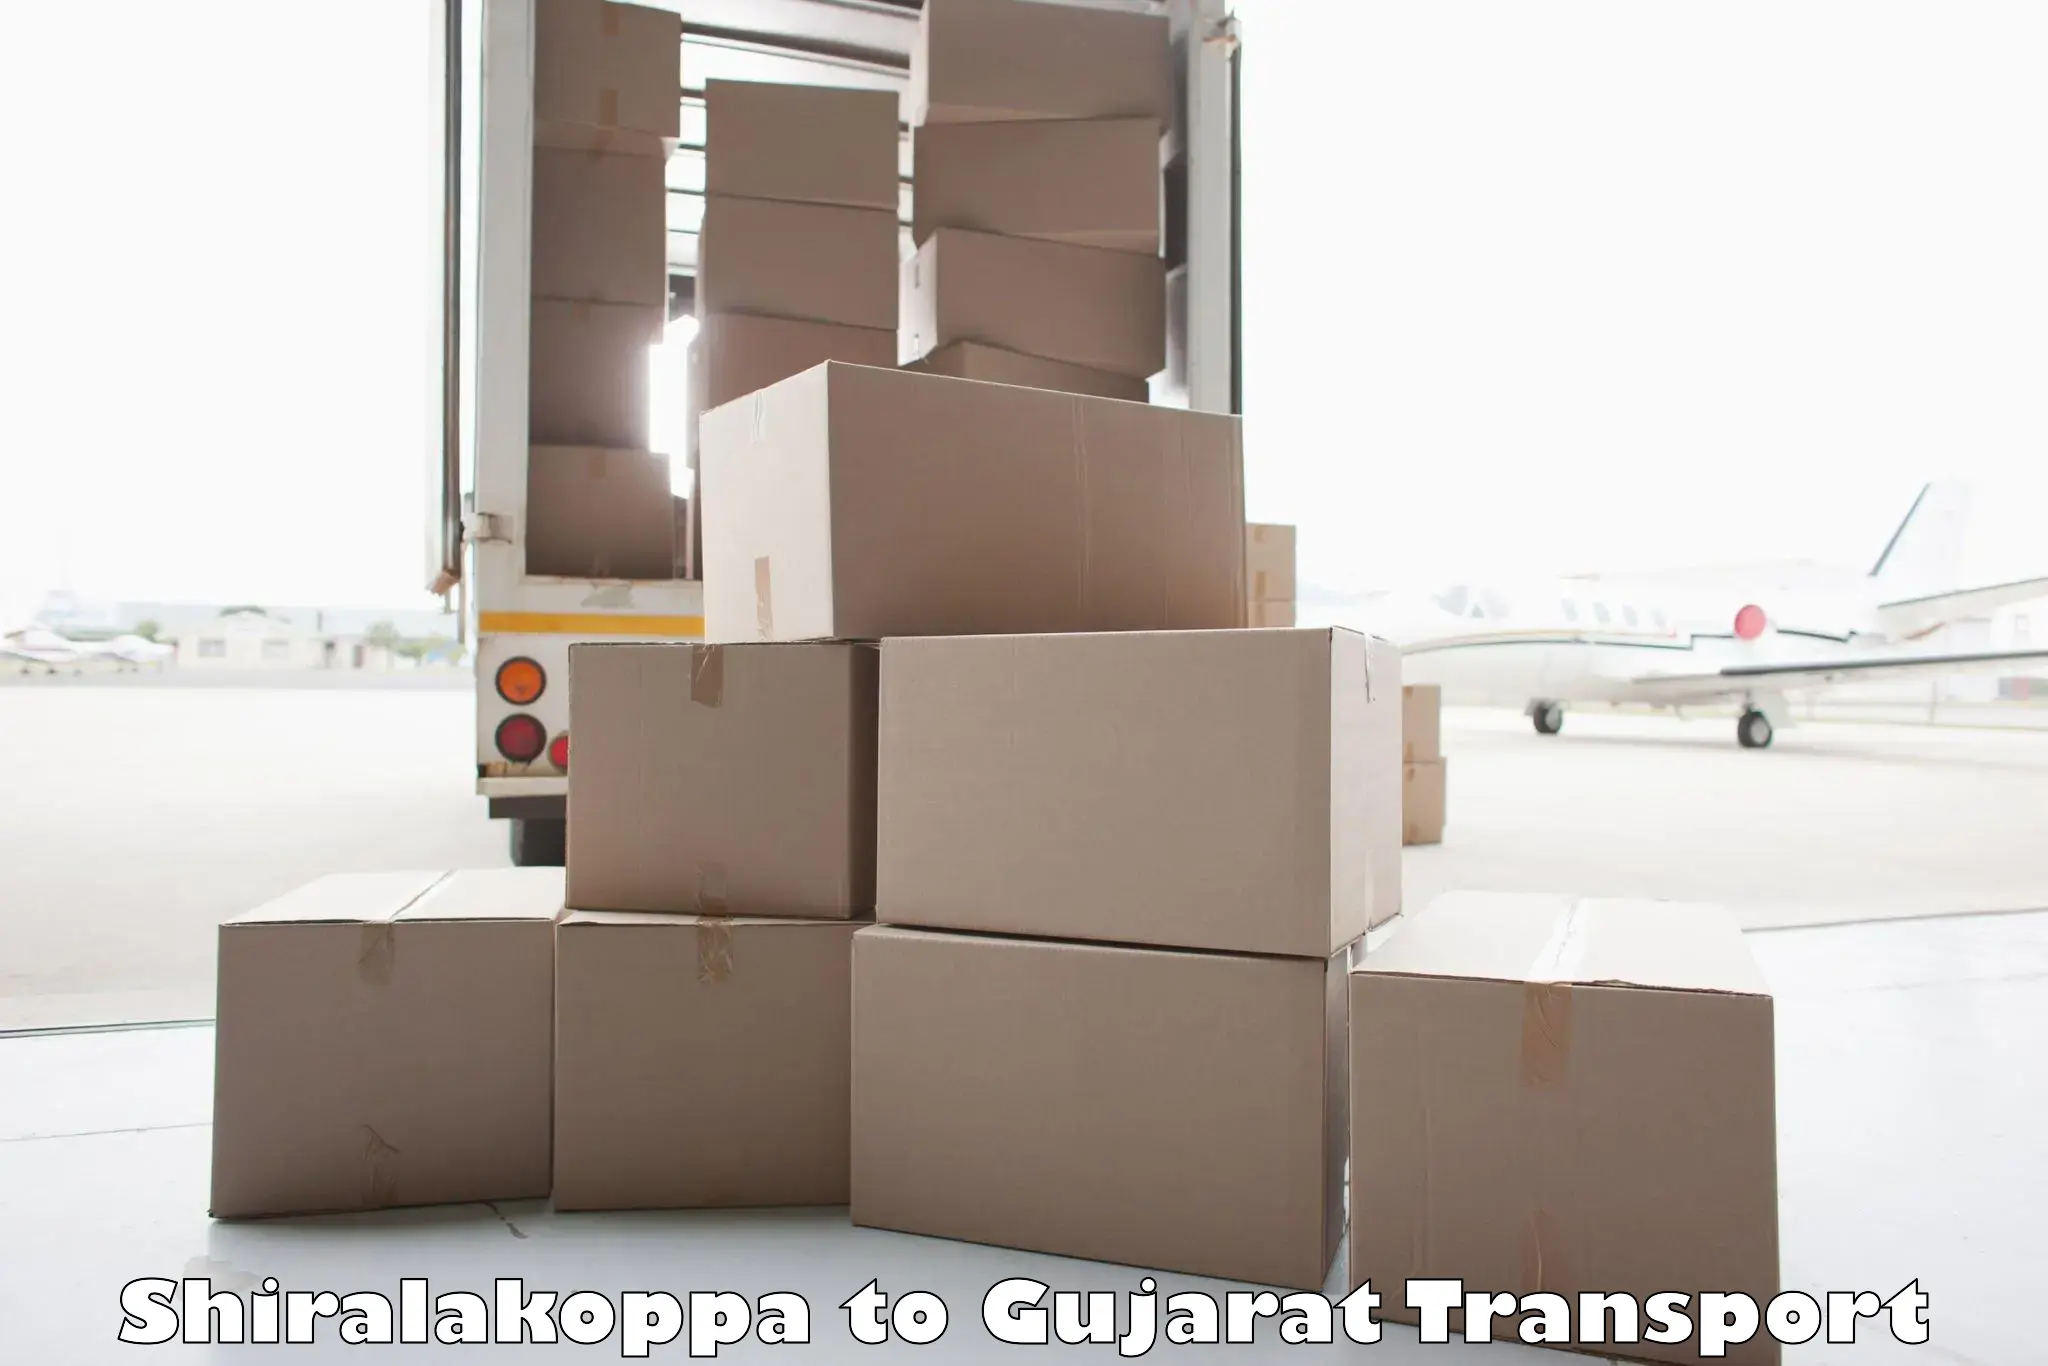 Daily transport service Shiralakoppa to Gujarat